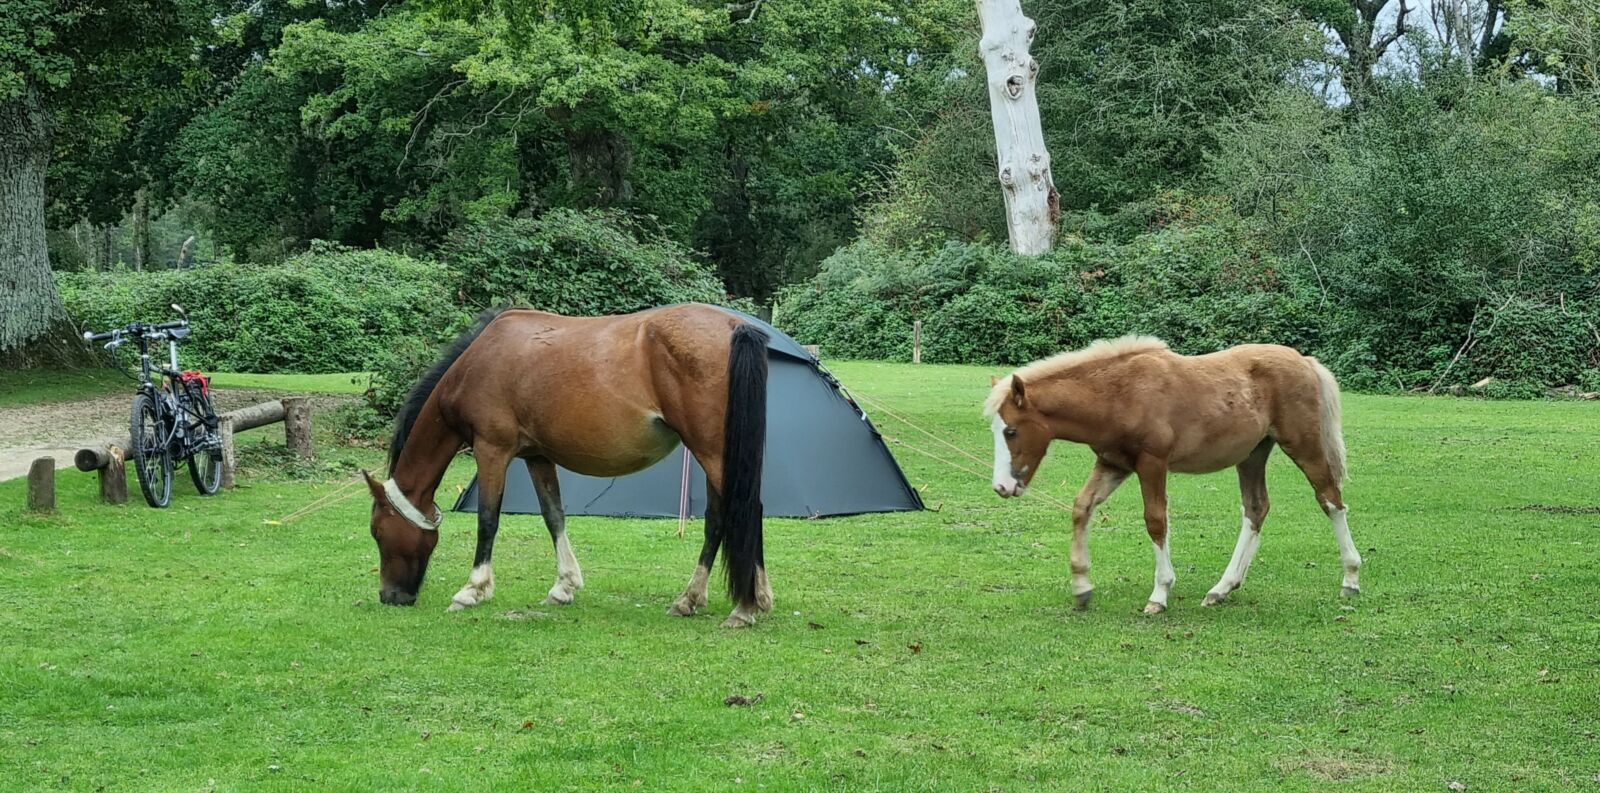 Horses, bike, tent